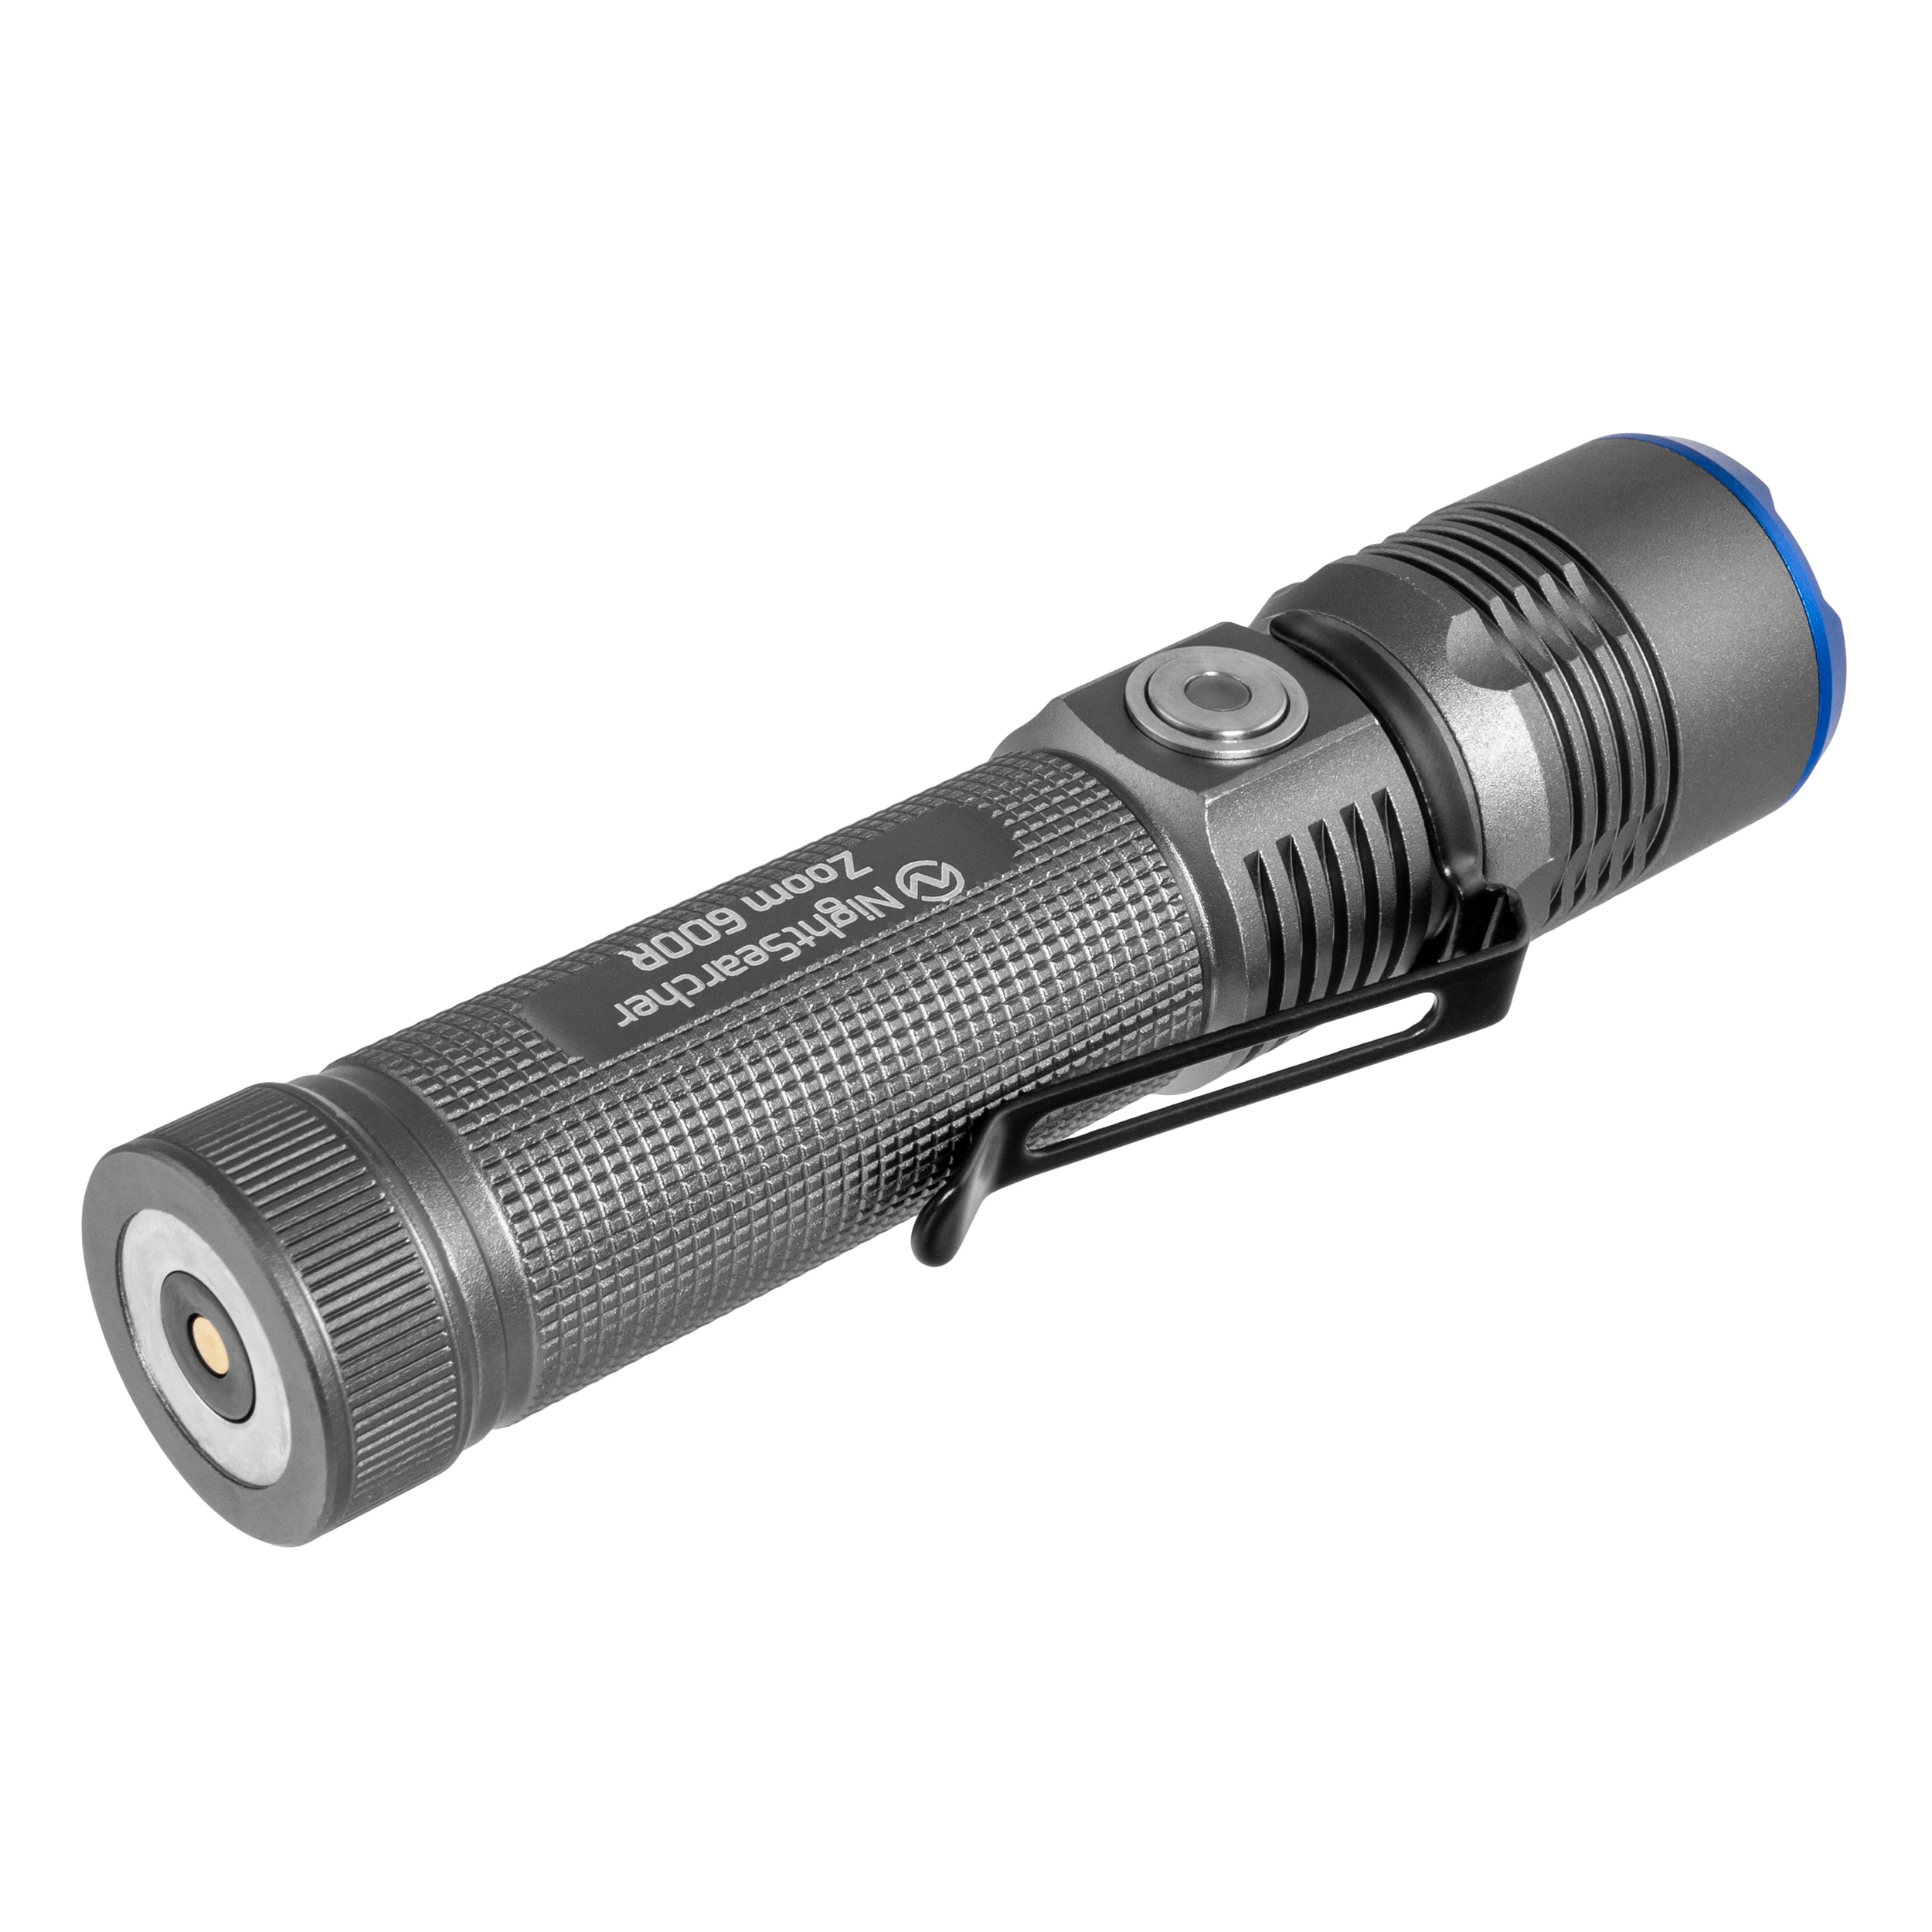 Ліхтарик NightSearcher Zoom 600R - 600 люменів